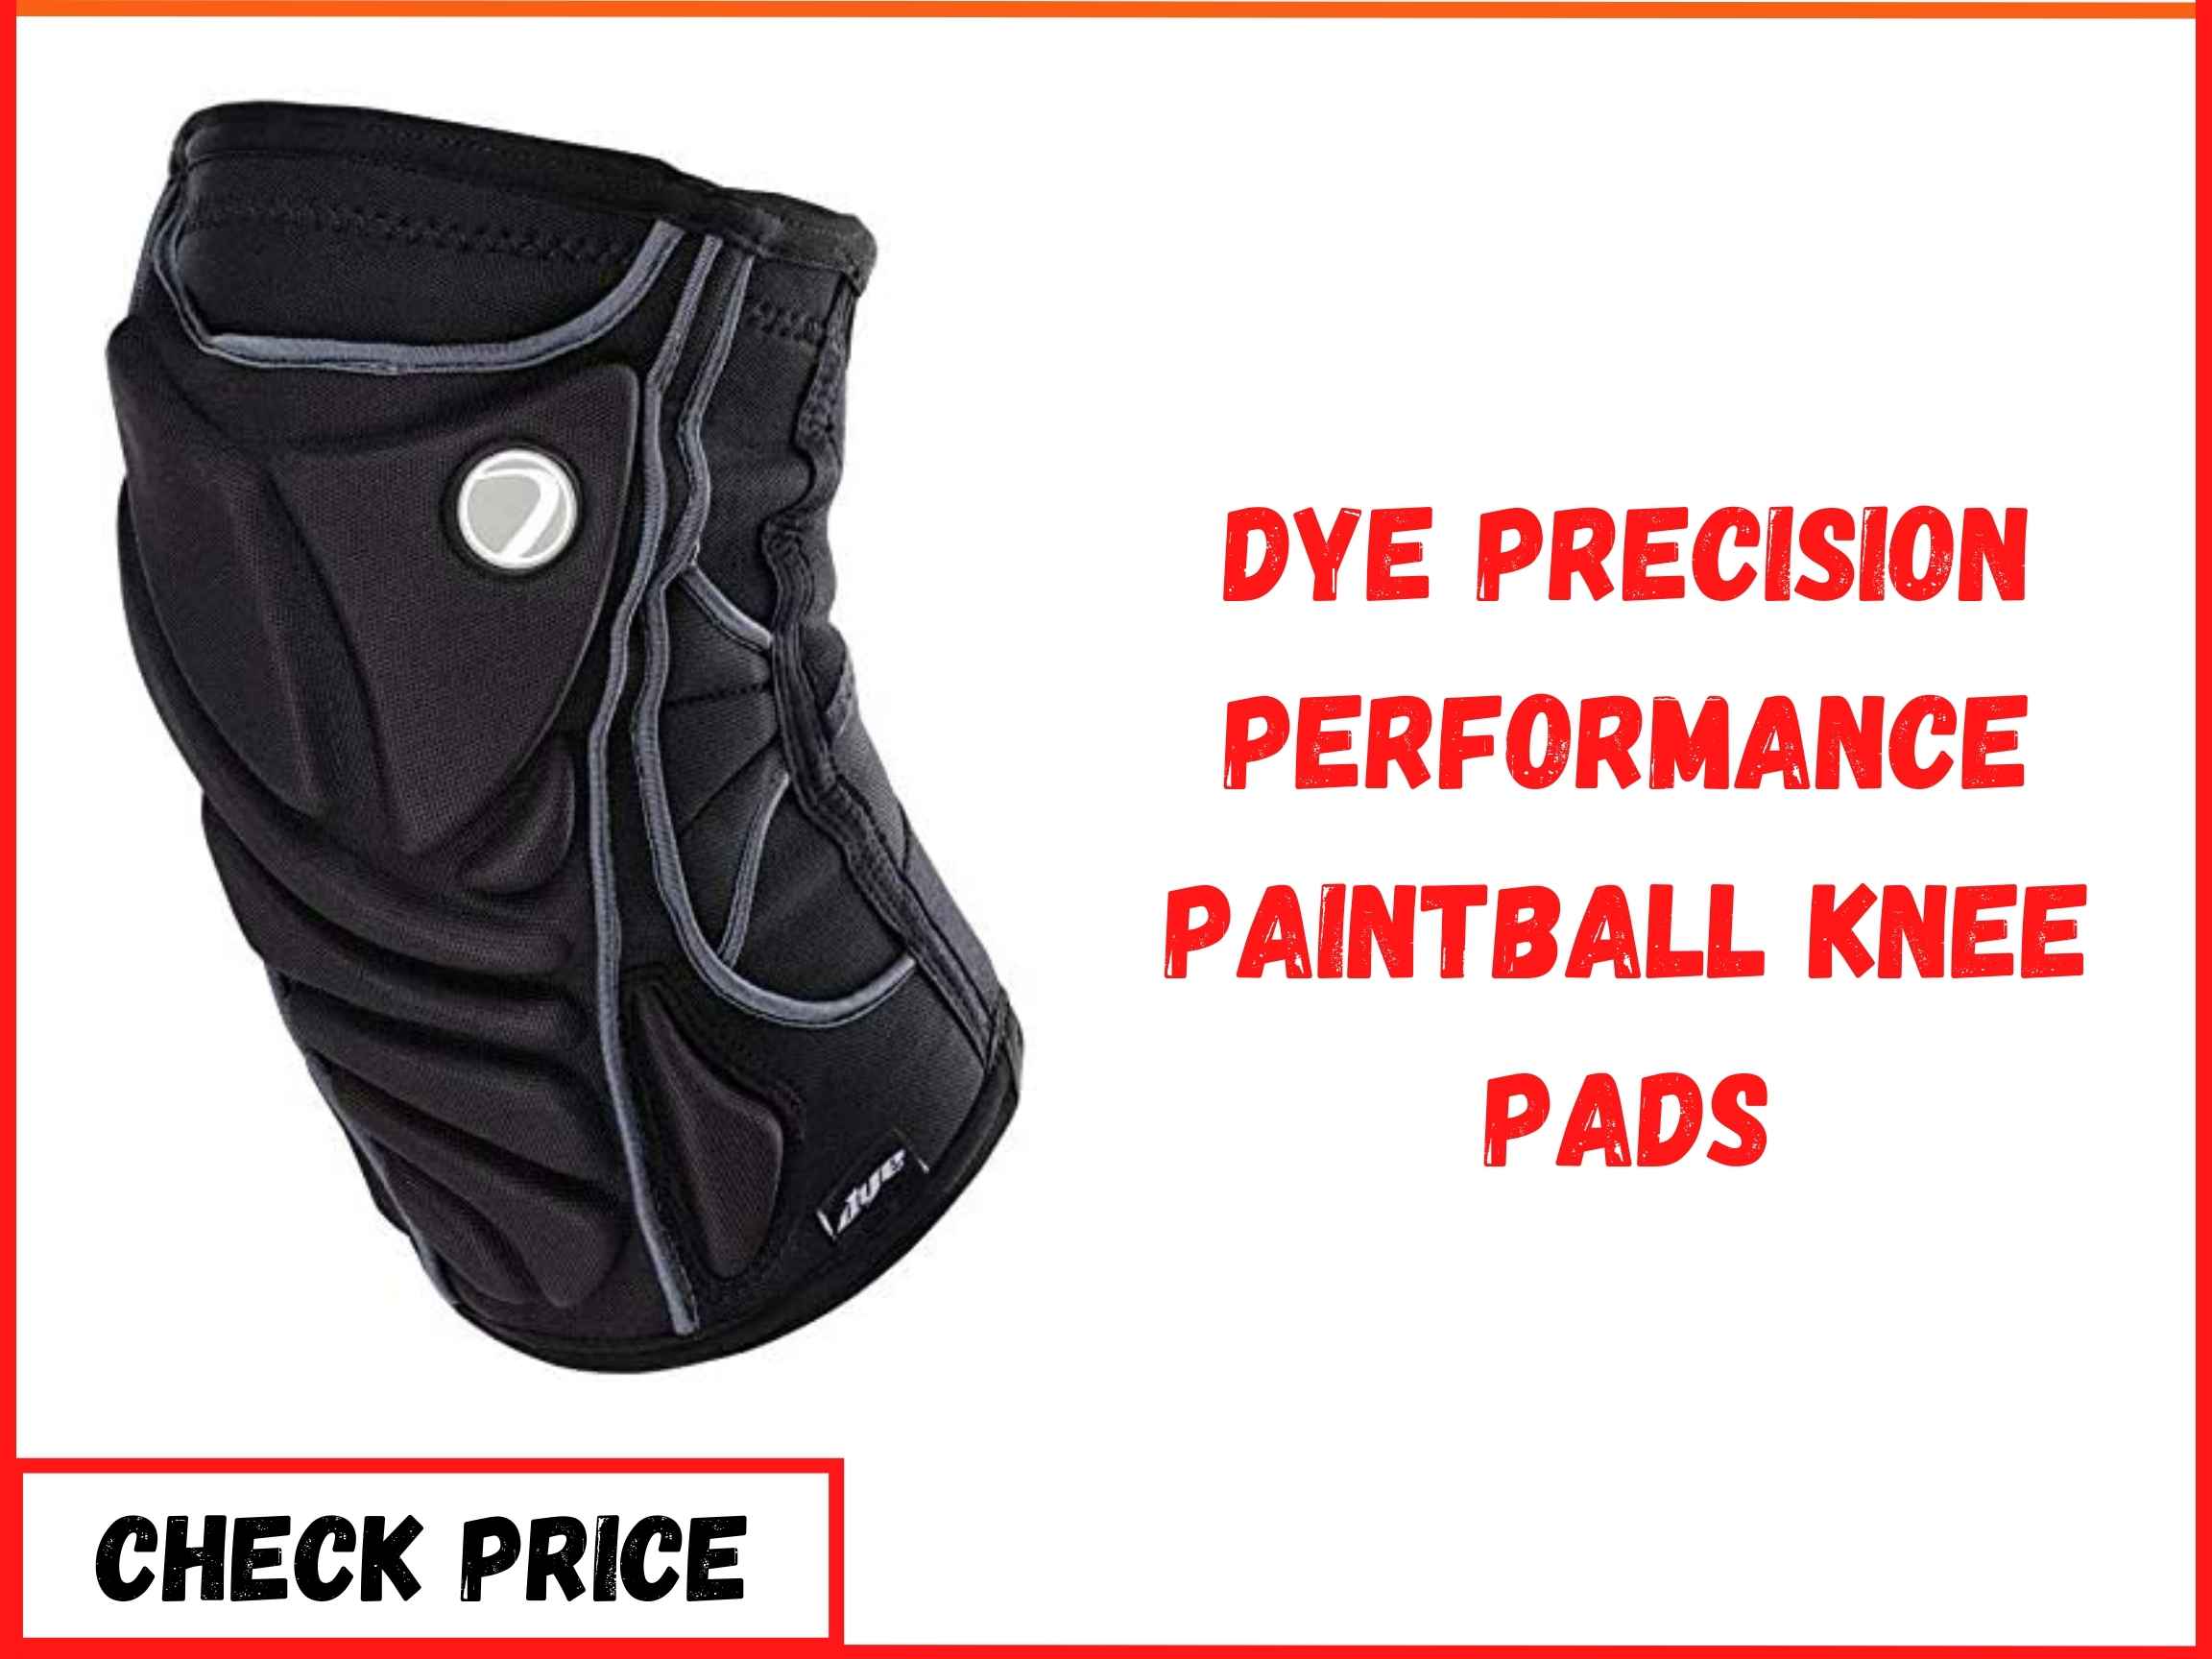 Dye Precision Performance Paintball Knee Pads